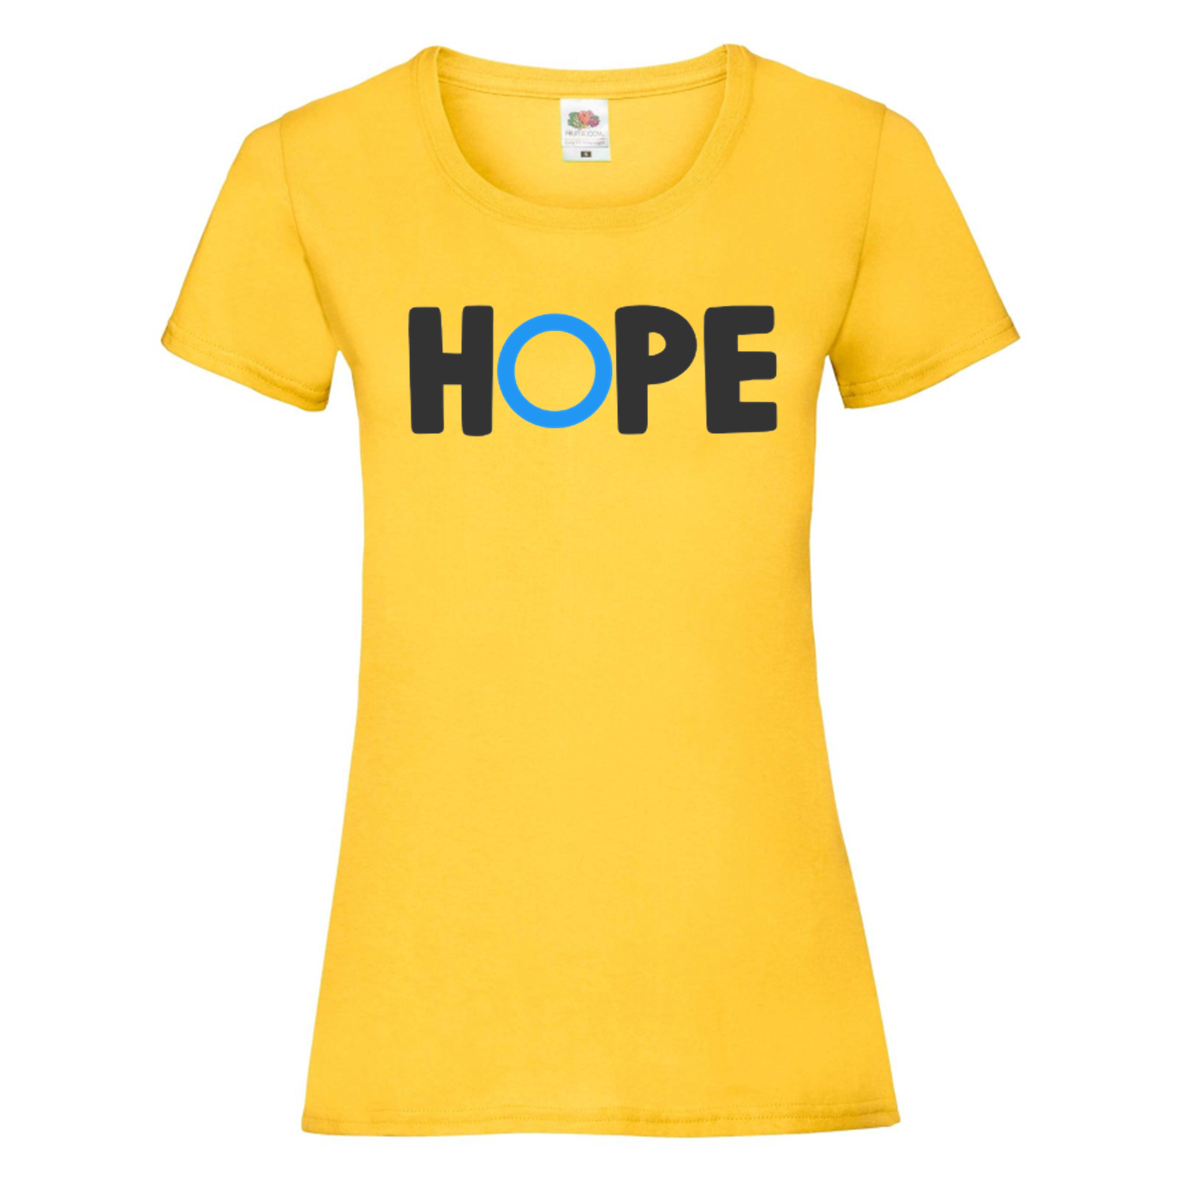 Hope Women's T Shirt